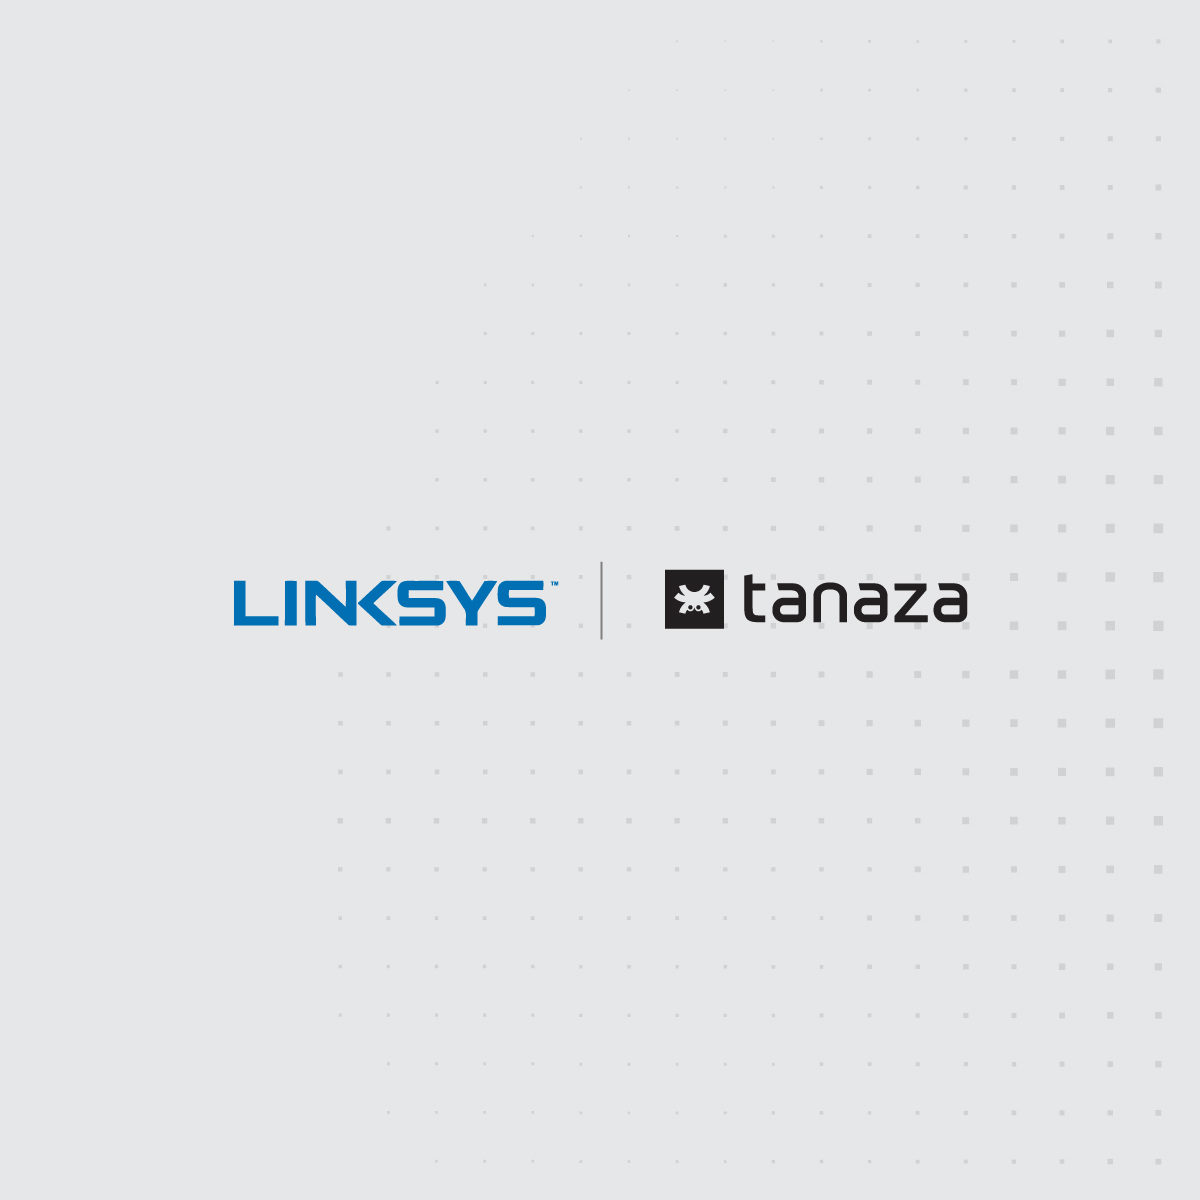 Linksys partnership with Tanaza